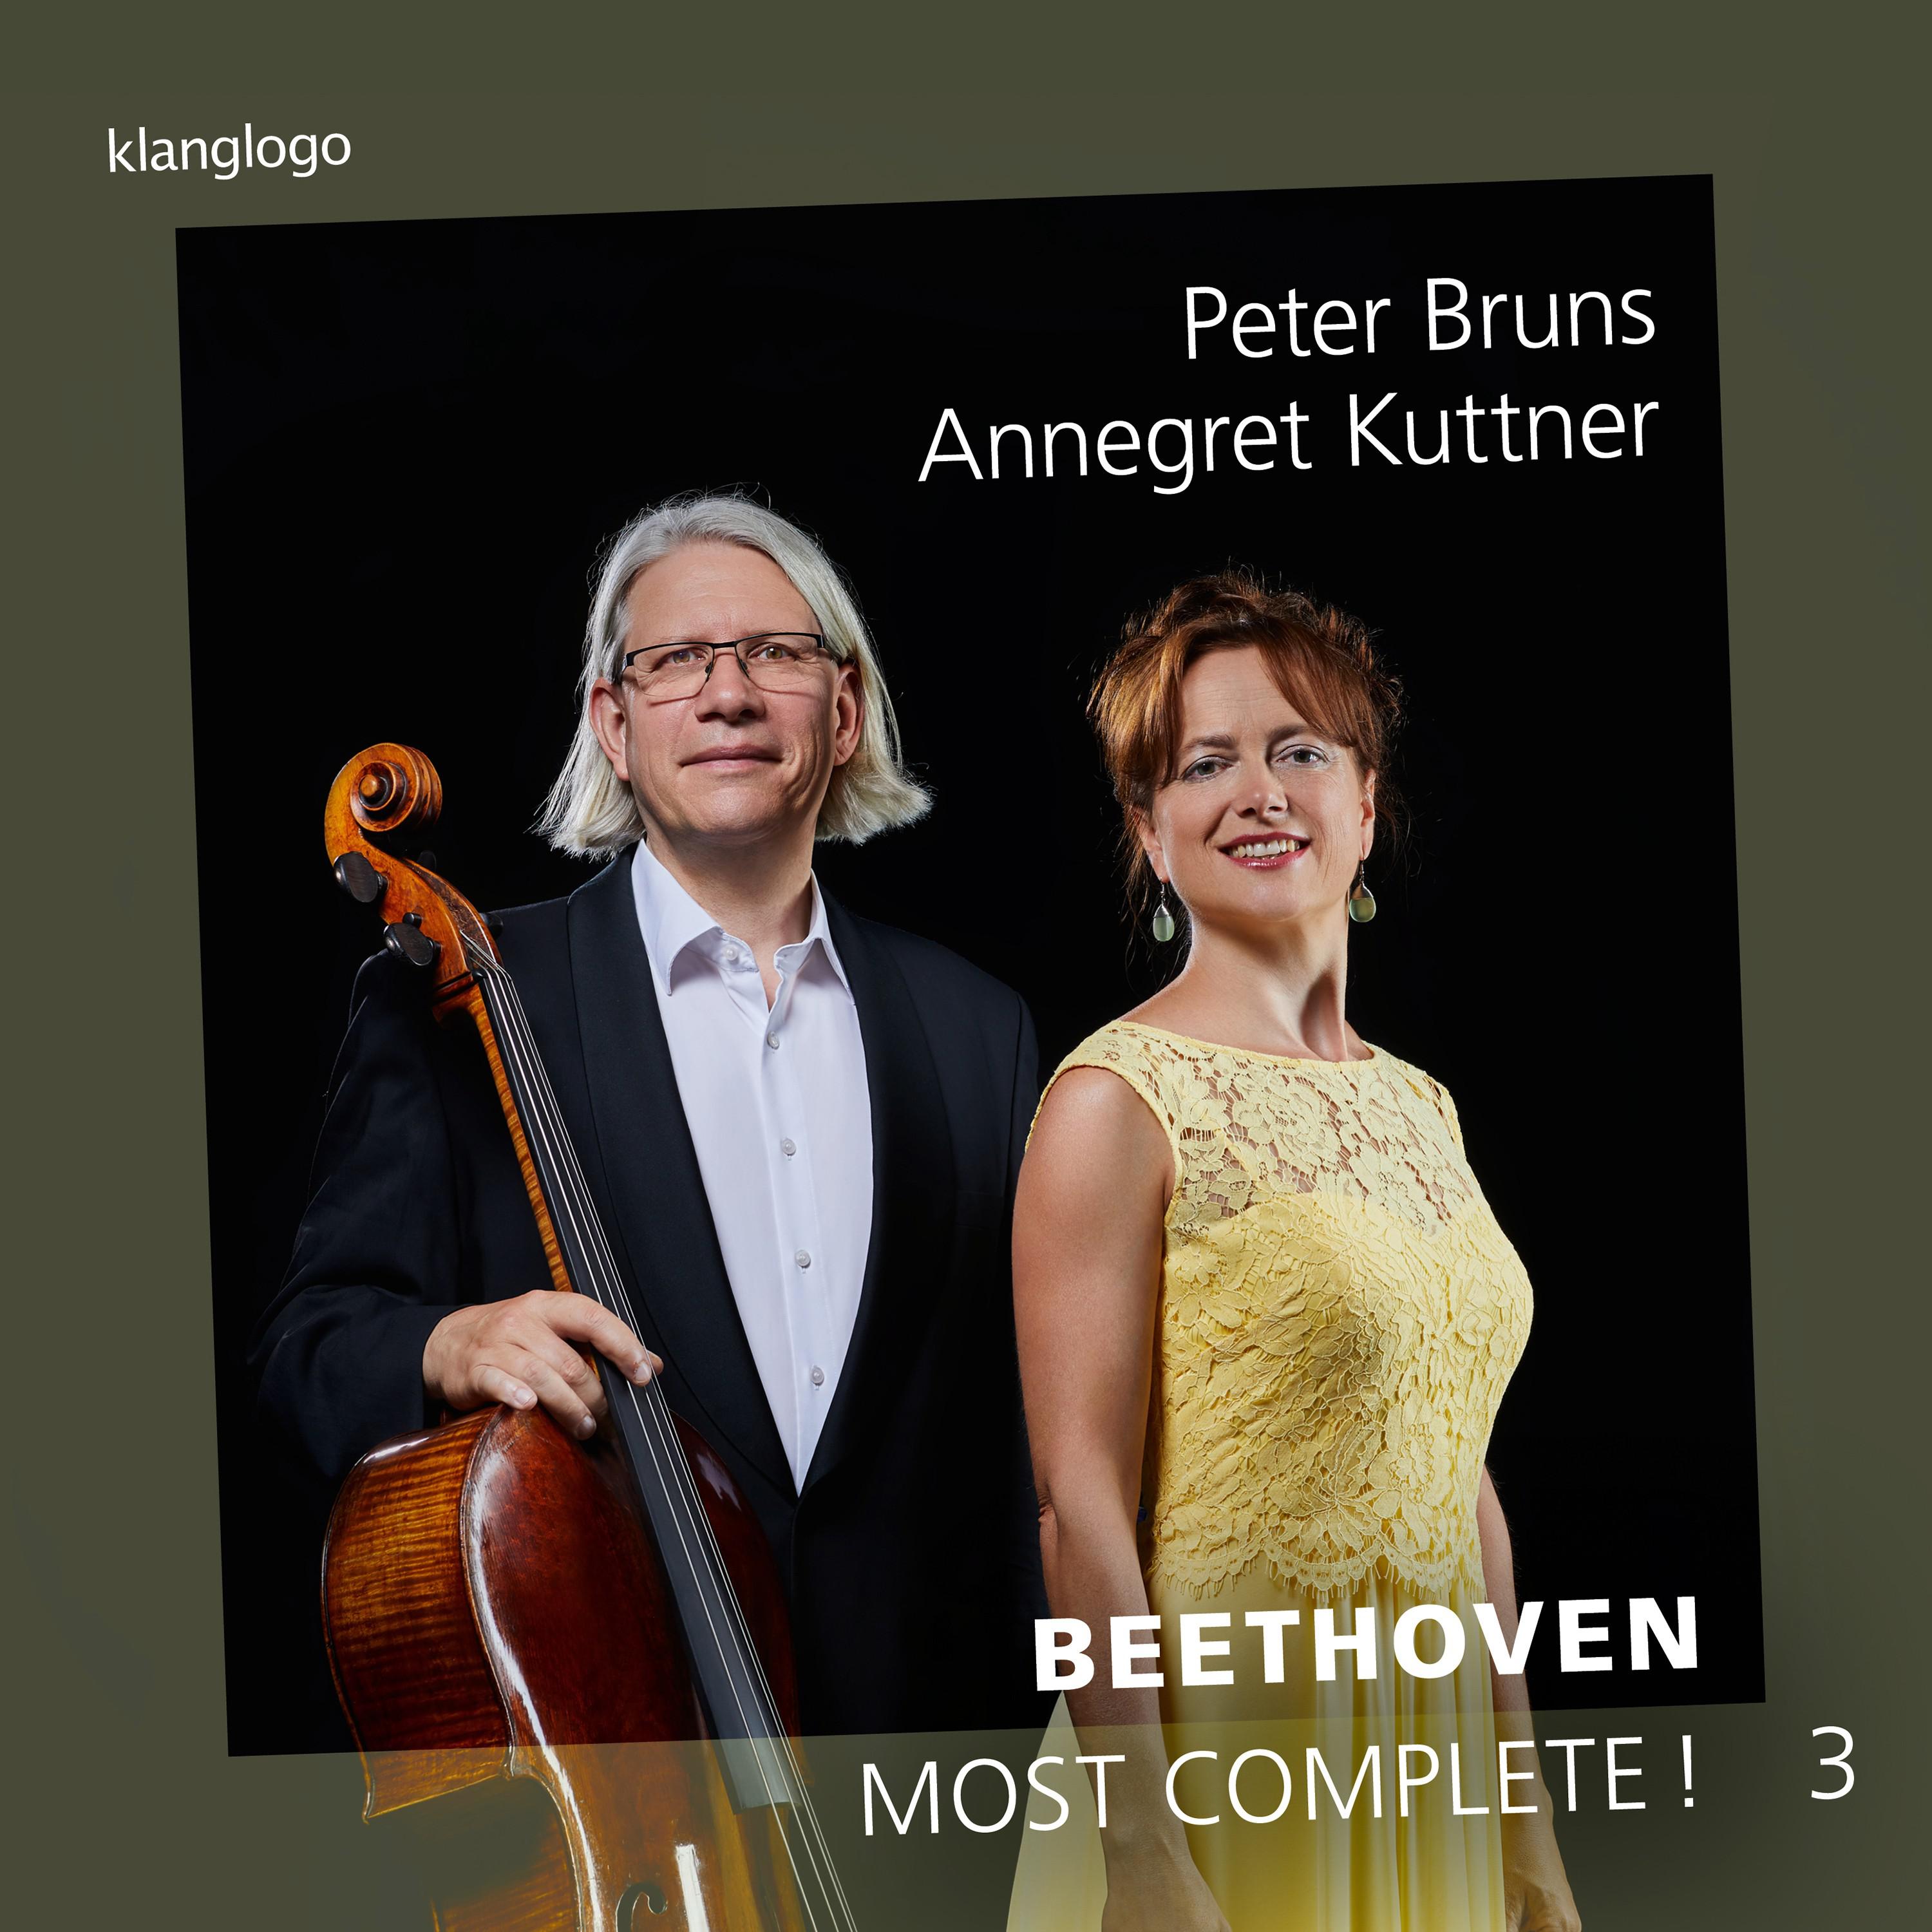 Peter Bruns - 1. Allegro moderato